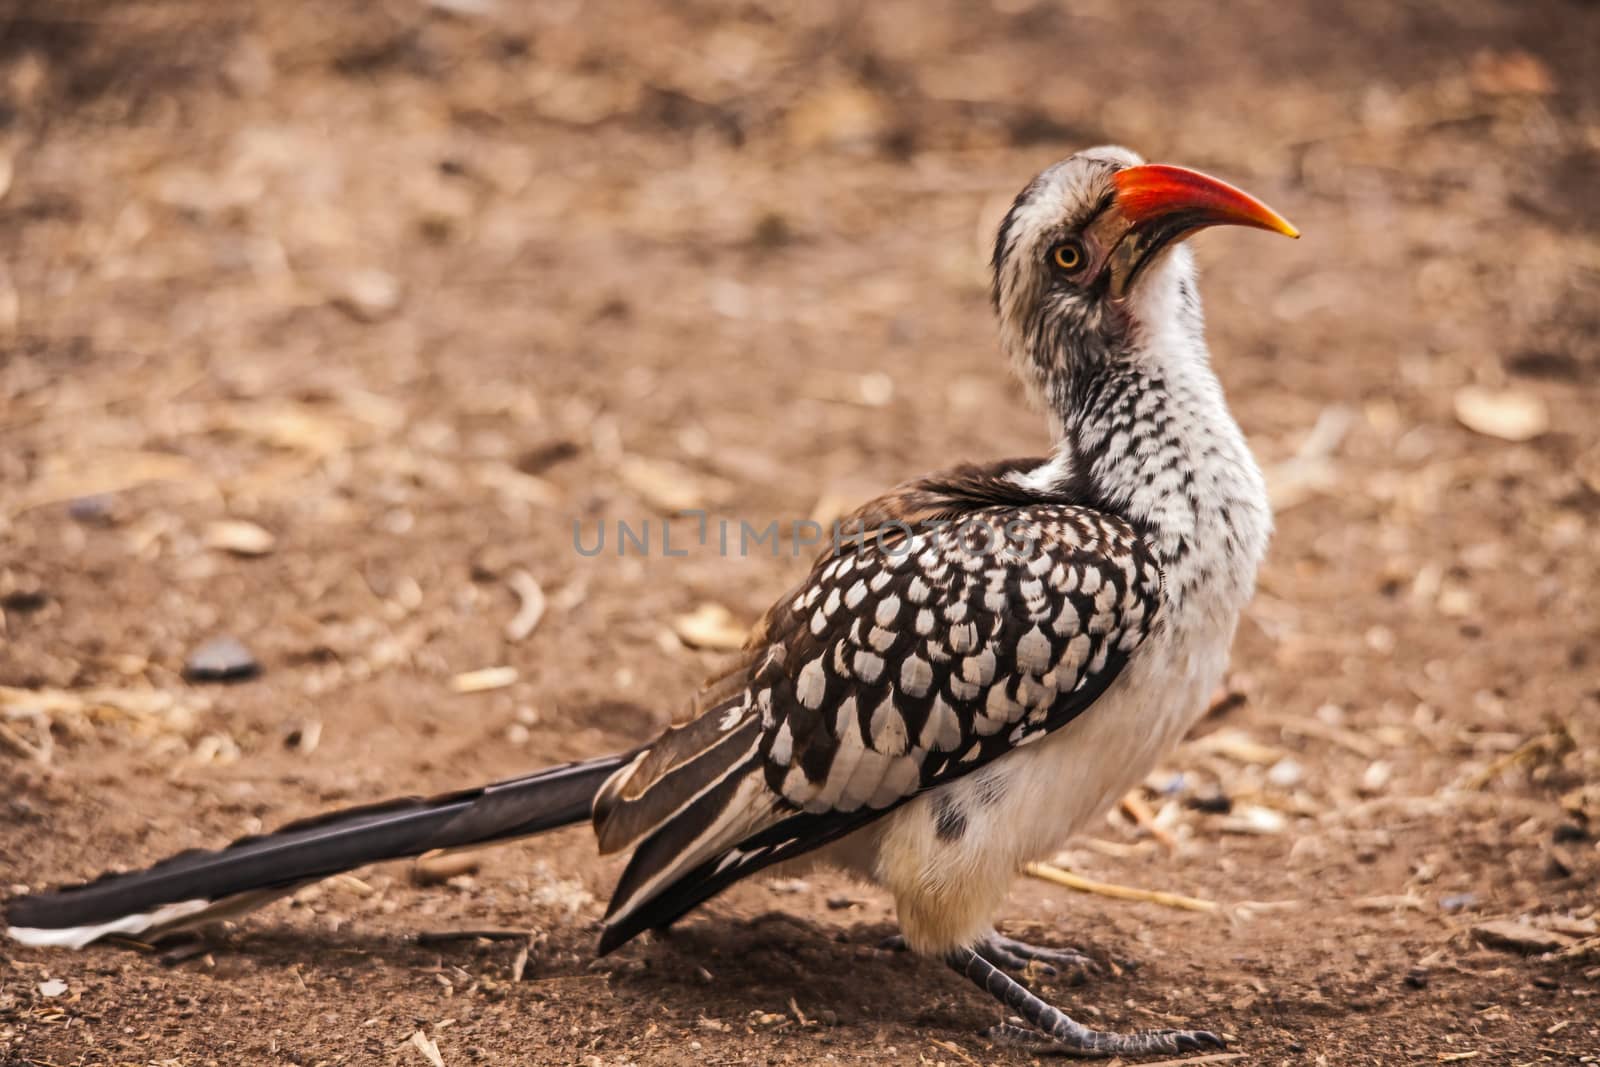 Red-billed Hornbill (Tockus erythrorhynchus) by kobus_peche